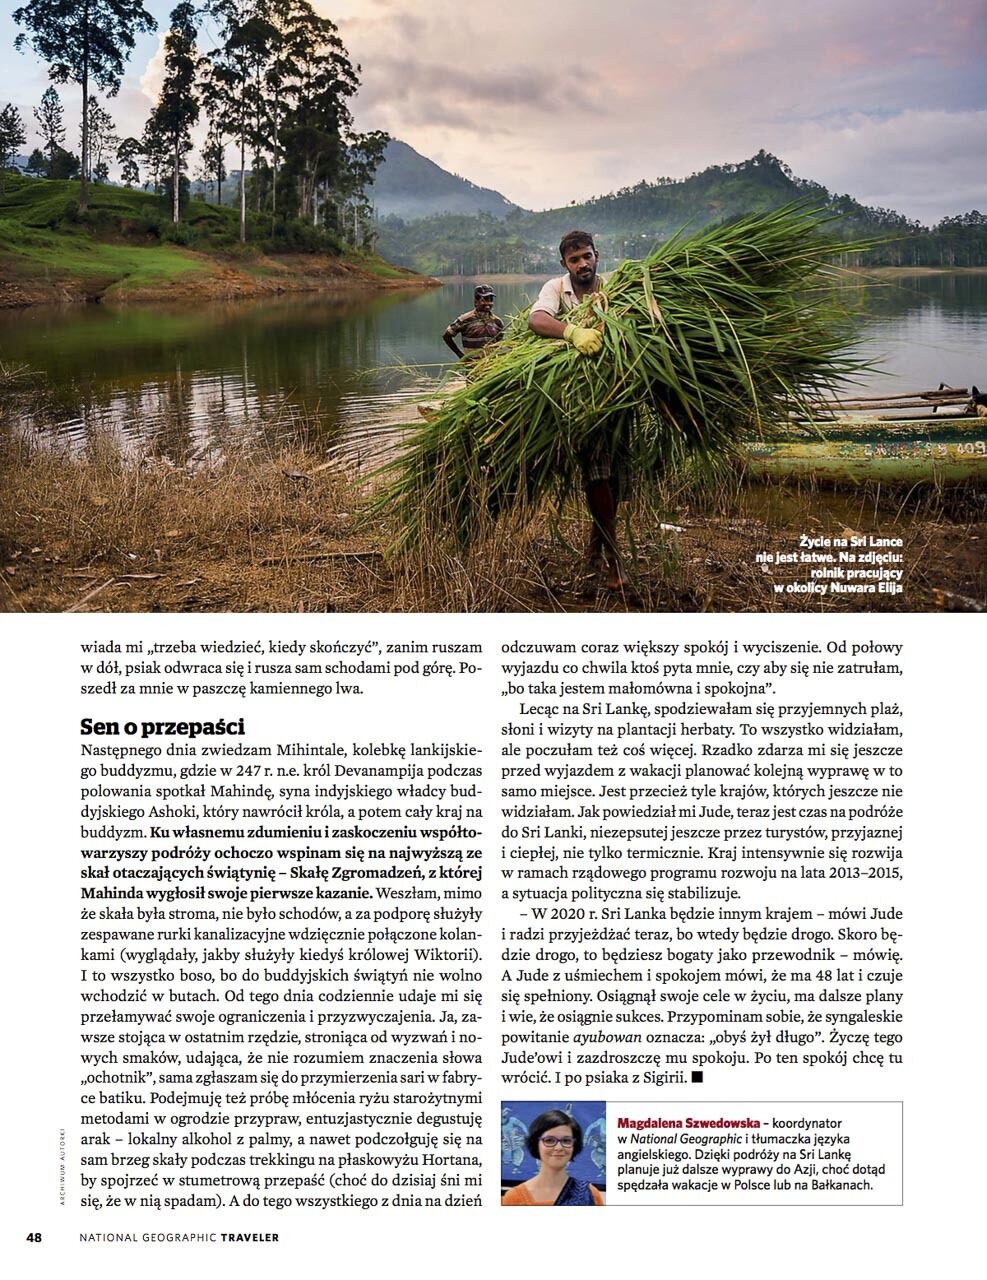 National Geographic Traveller Magazine Sri Lanka Article 3